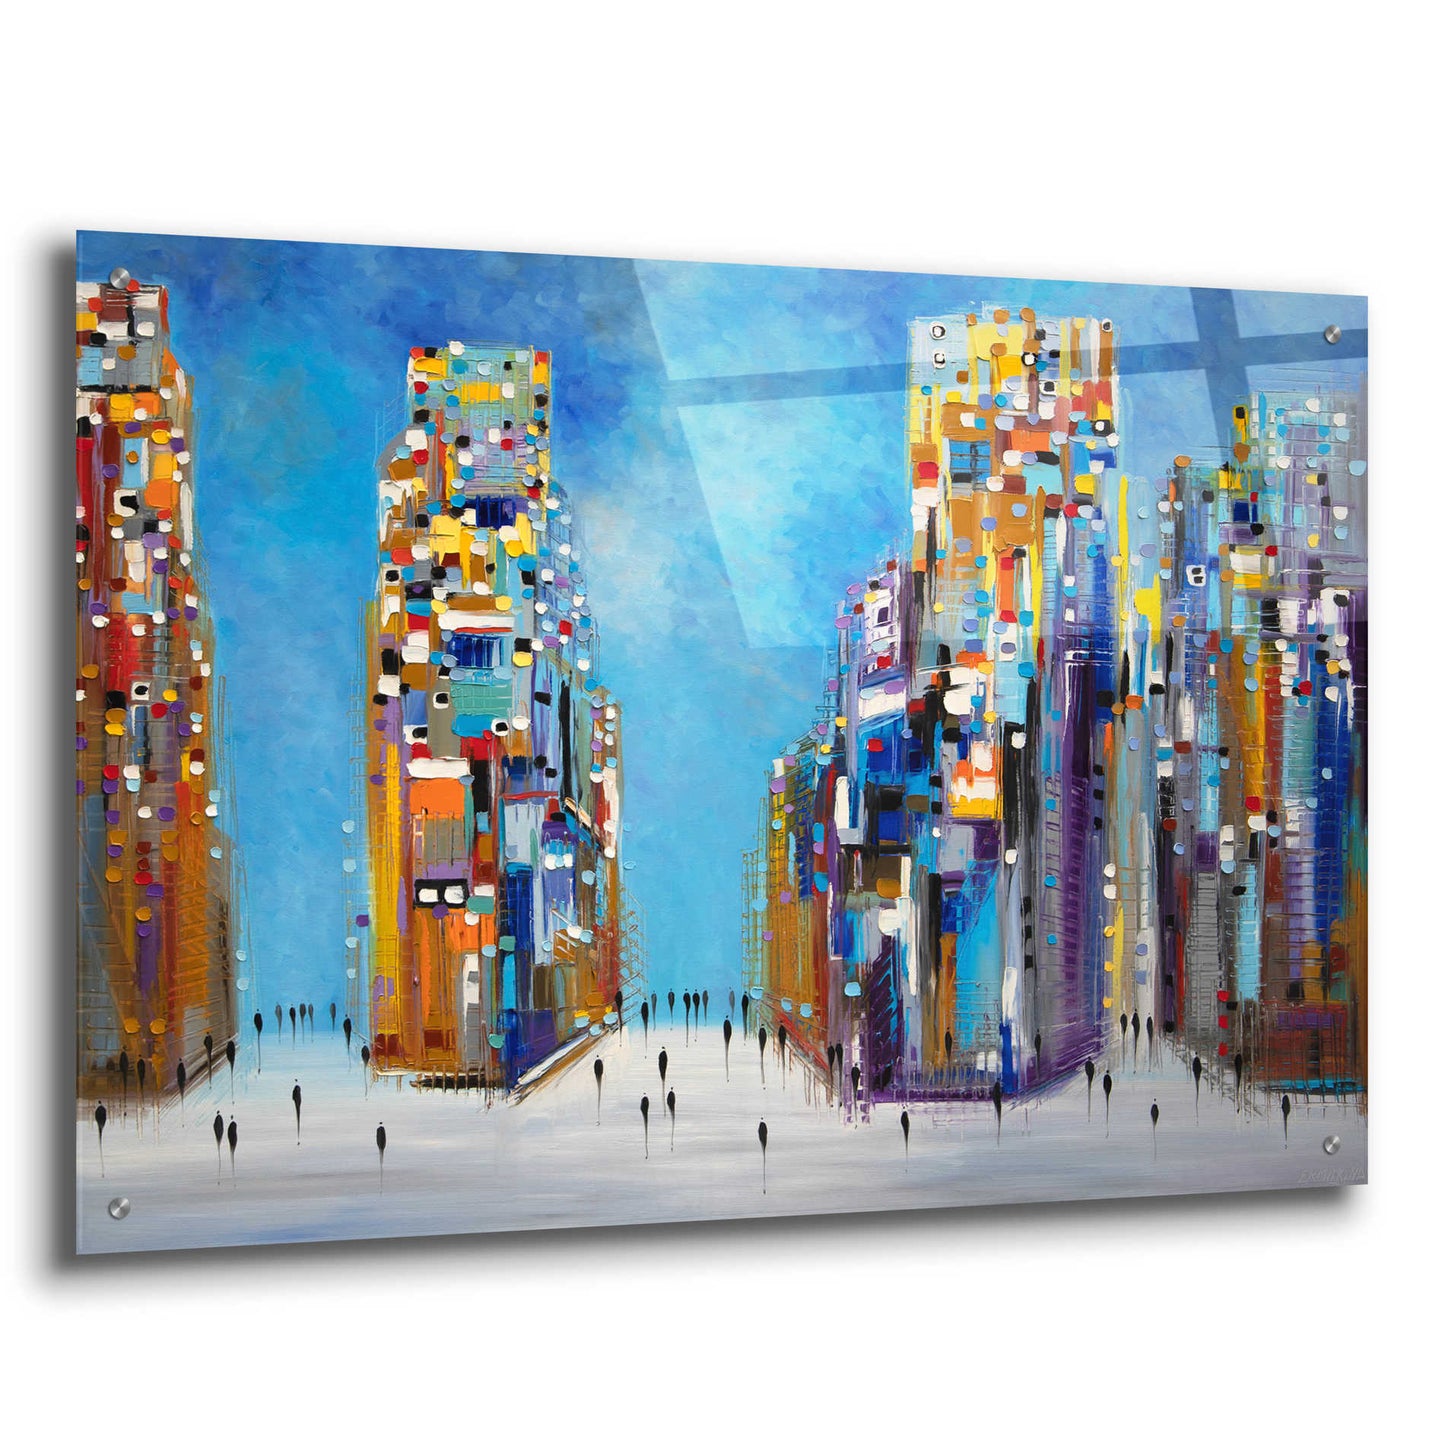 Epic Art 'Nyc Streets' by Ekaterina Ermilkina Acrylic Glass Wall Art,36x24